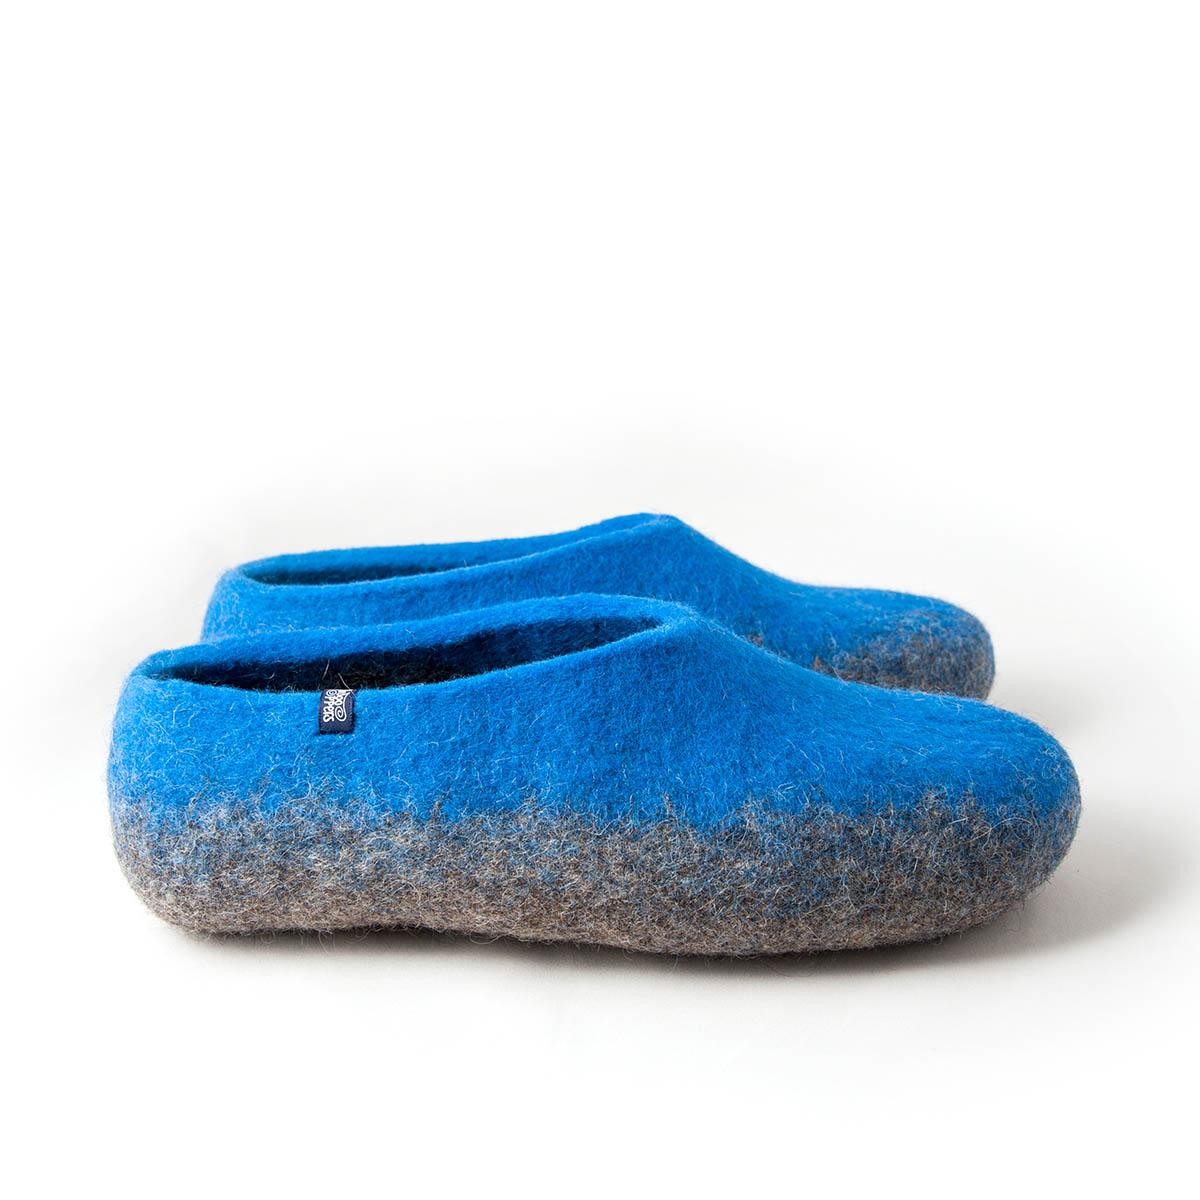 bearpaw loki slippers